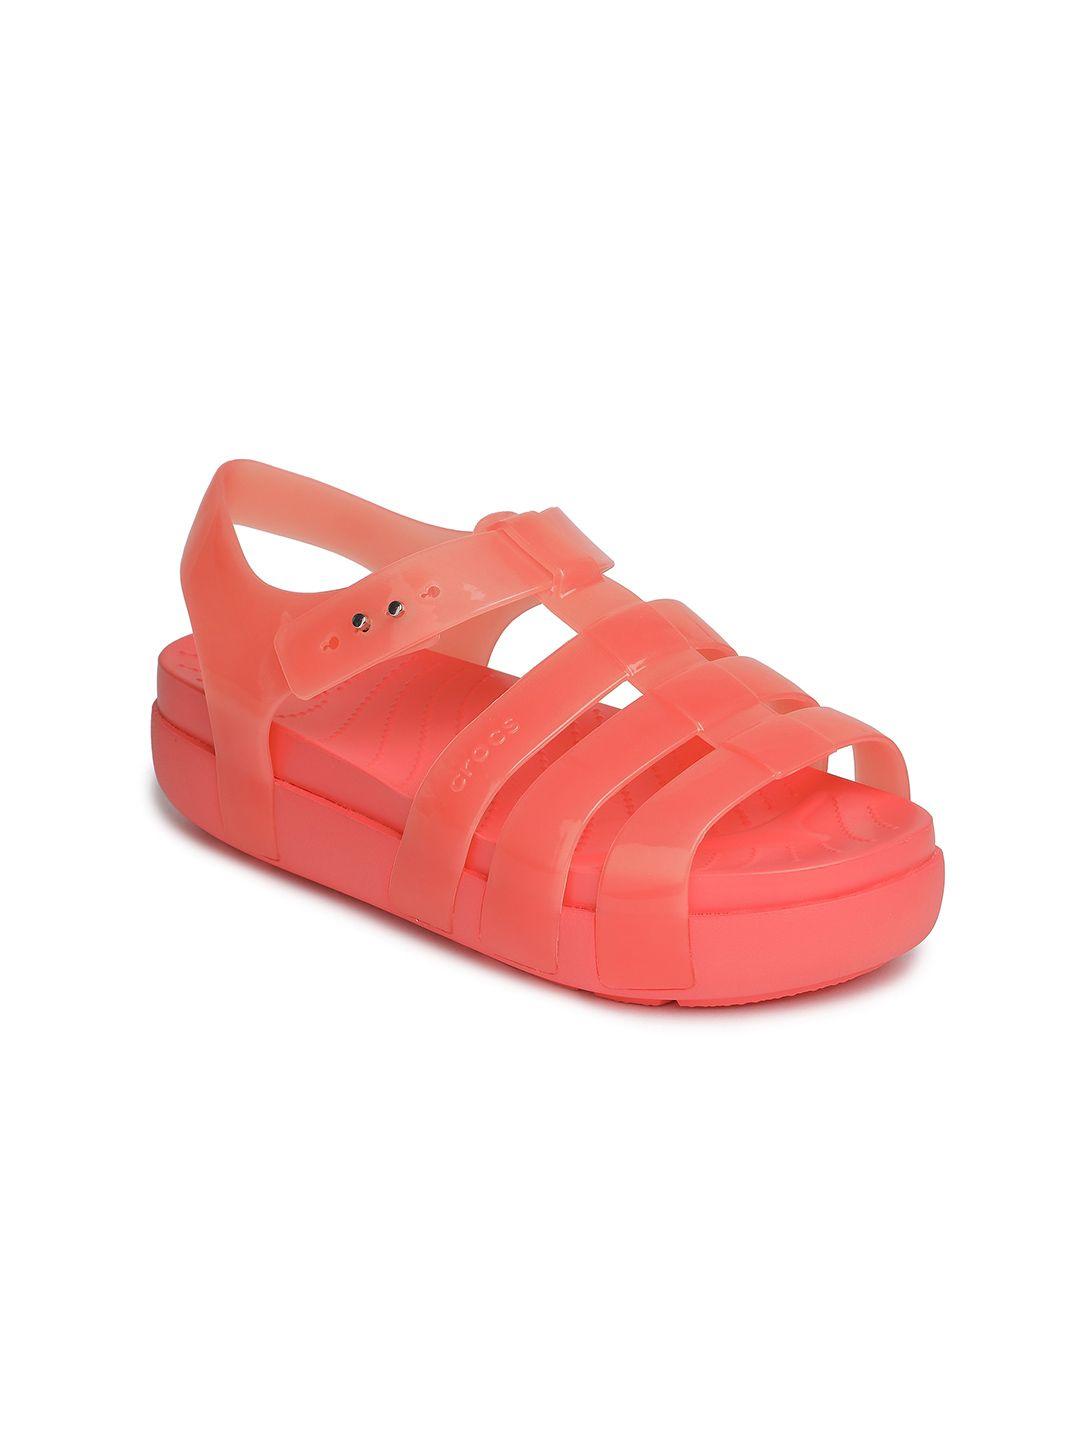 crocs splash strappy open toe flats